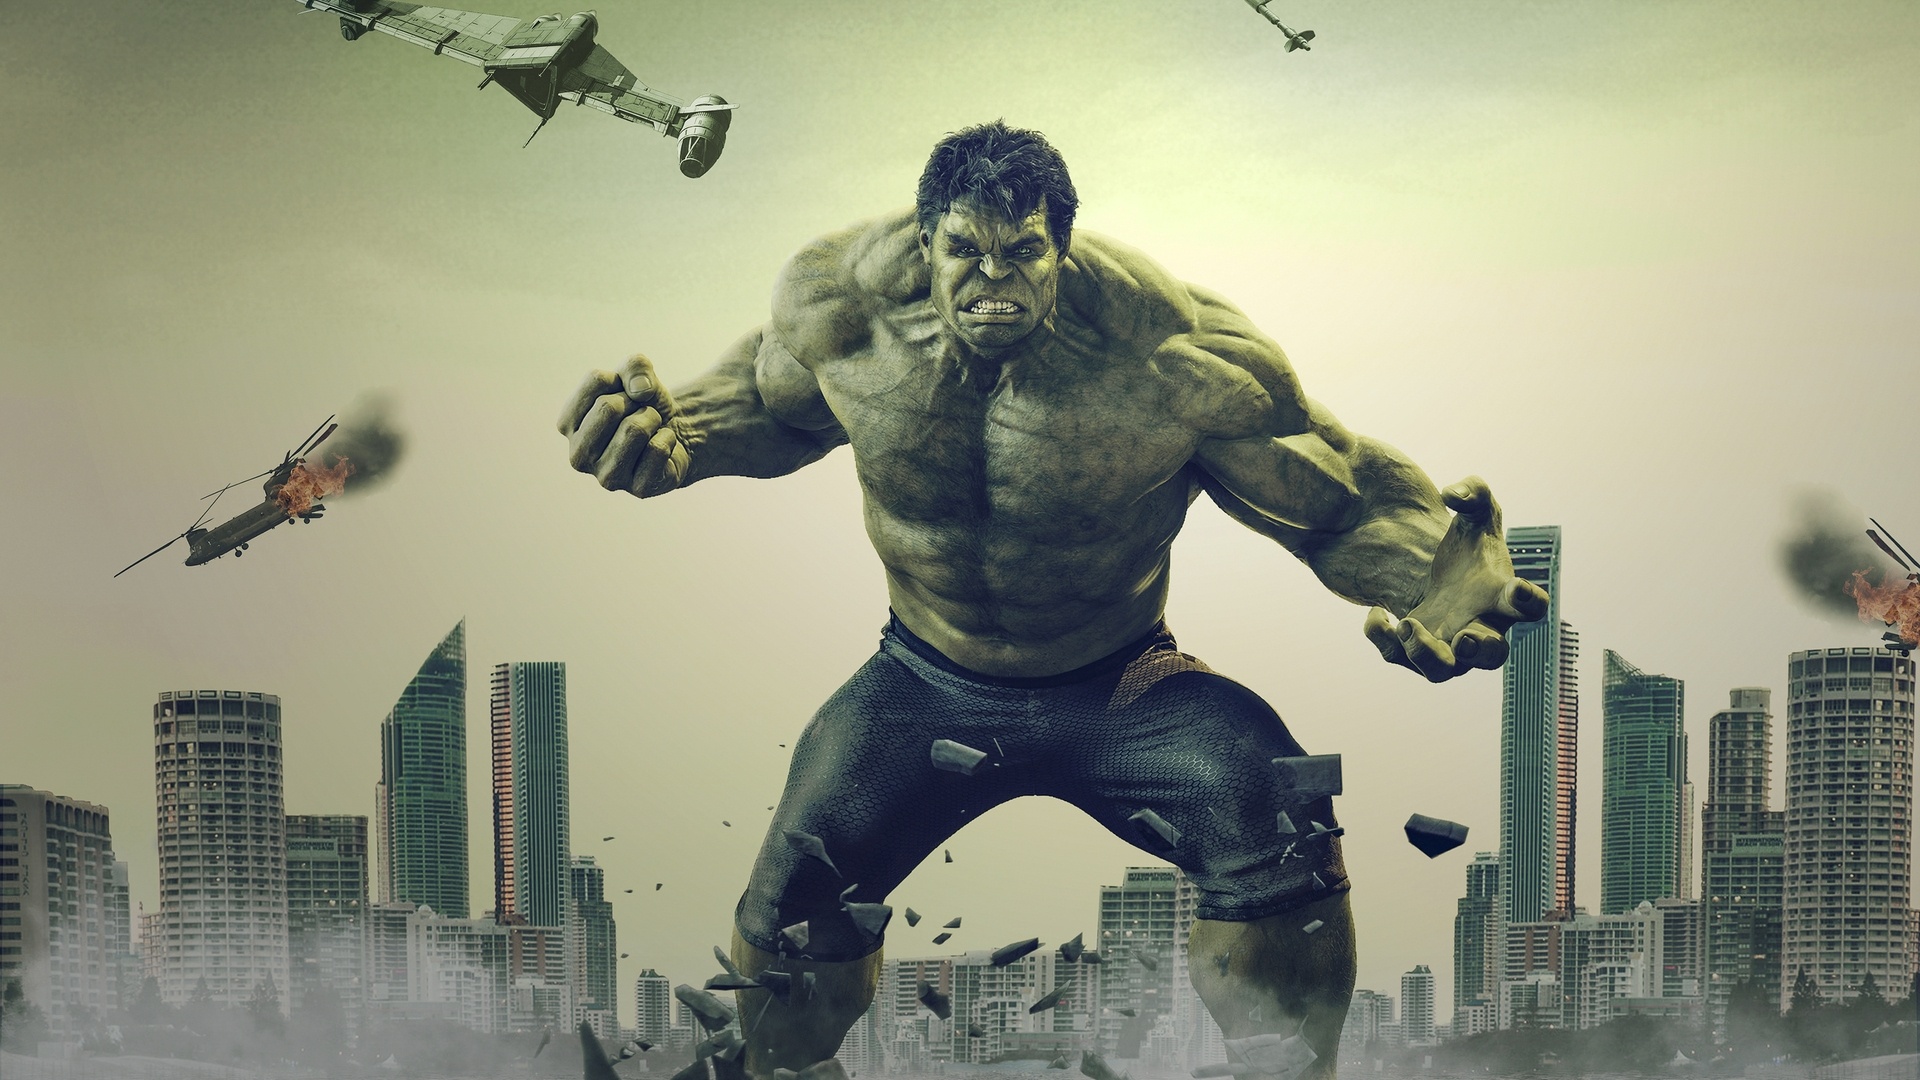 Hulk cool background